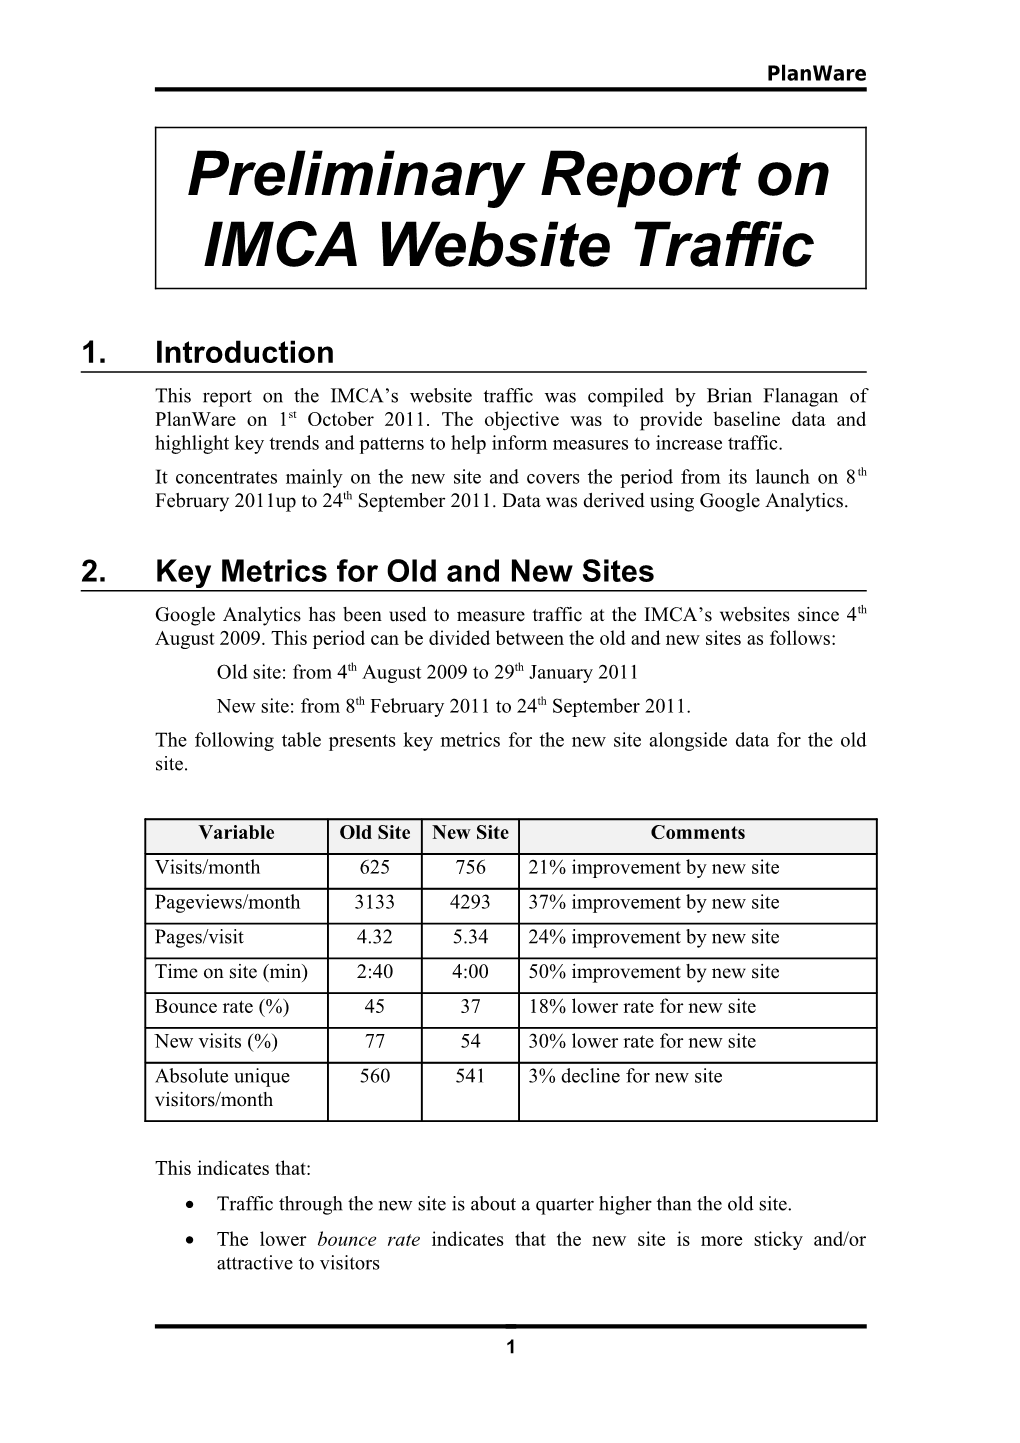 Preliminary Report on IMCA Website Traffic